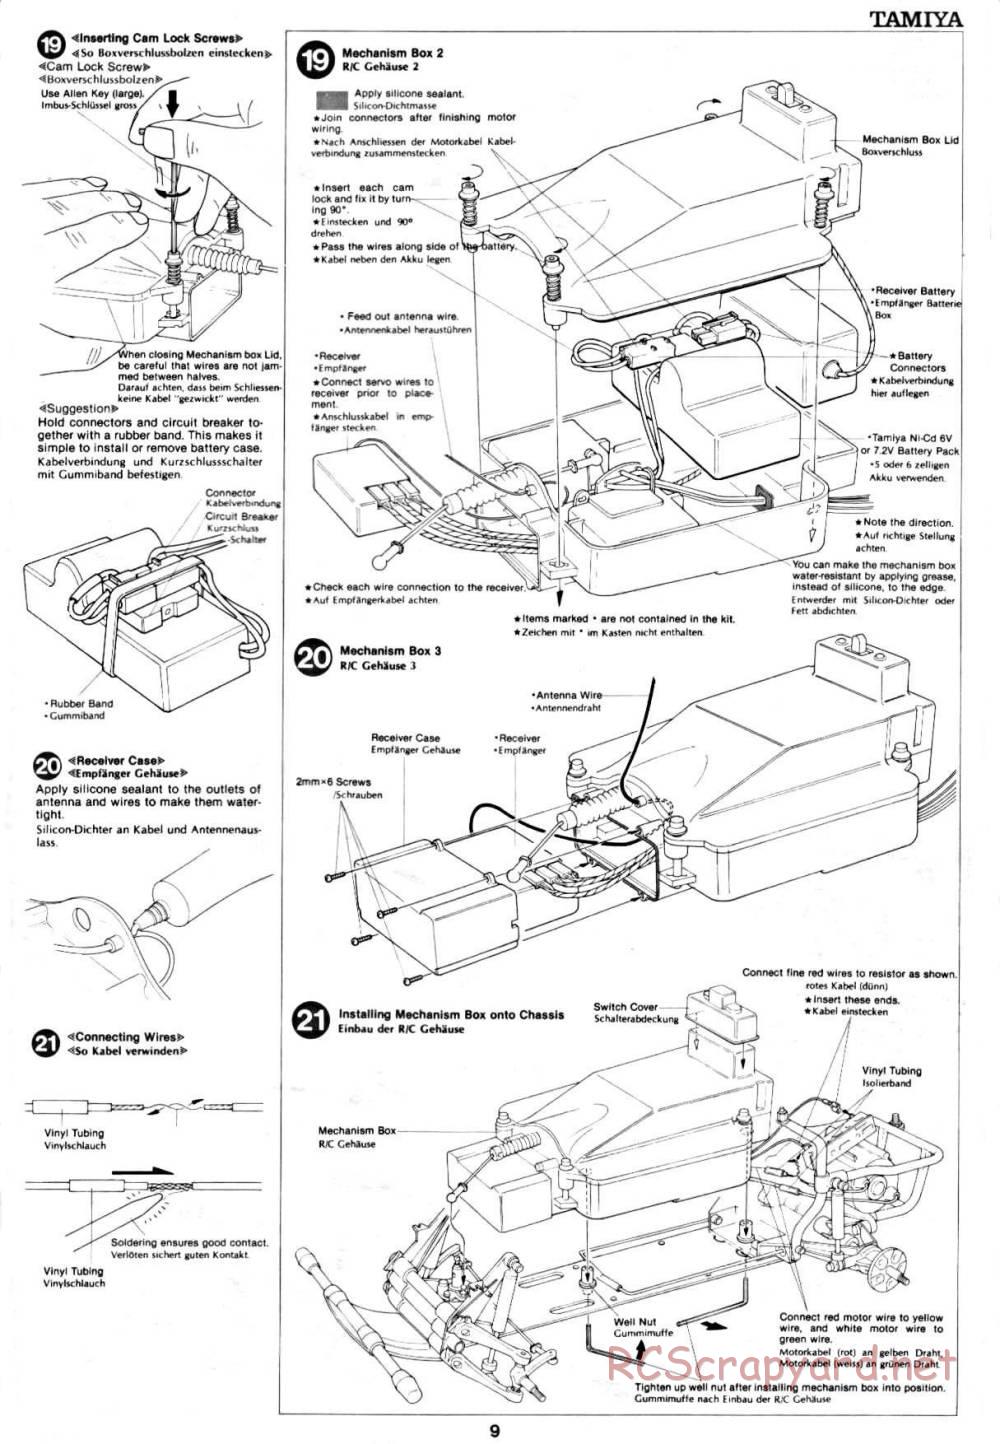 Tamiya - Ford F-150 Ranger XLT - 58027 - Manual - Page 9